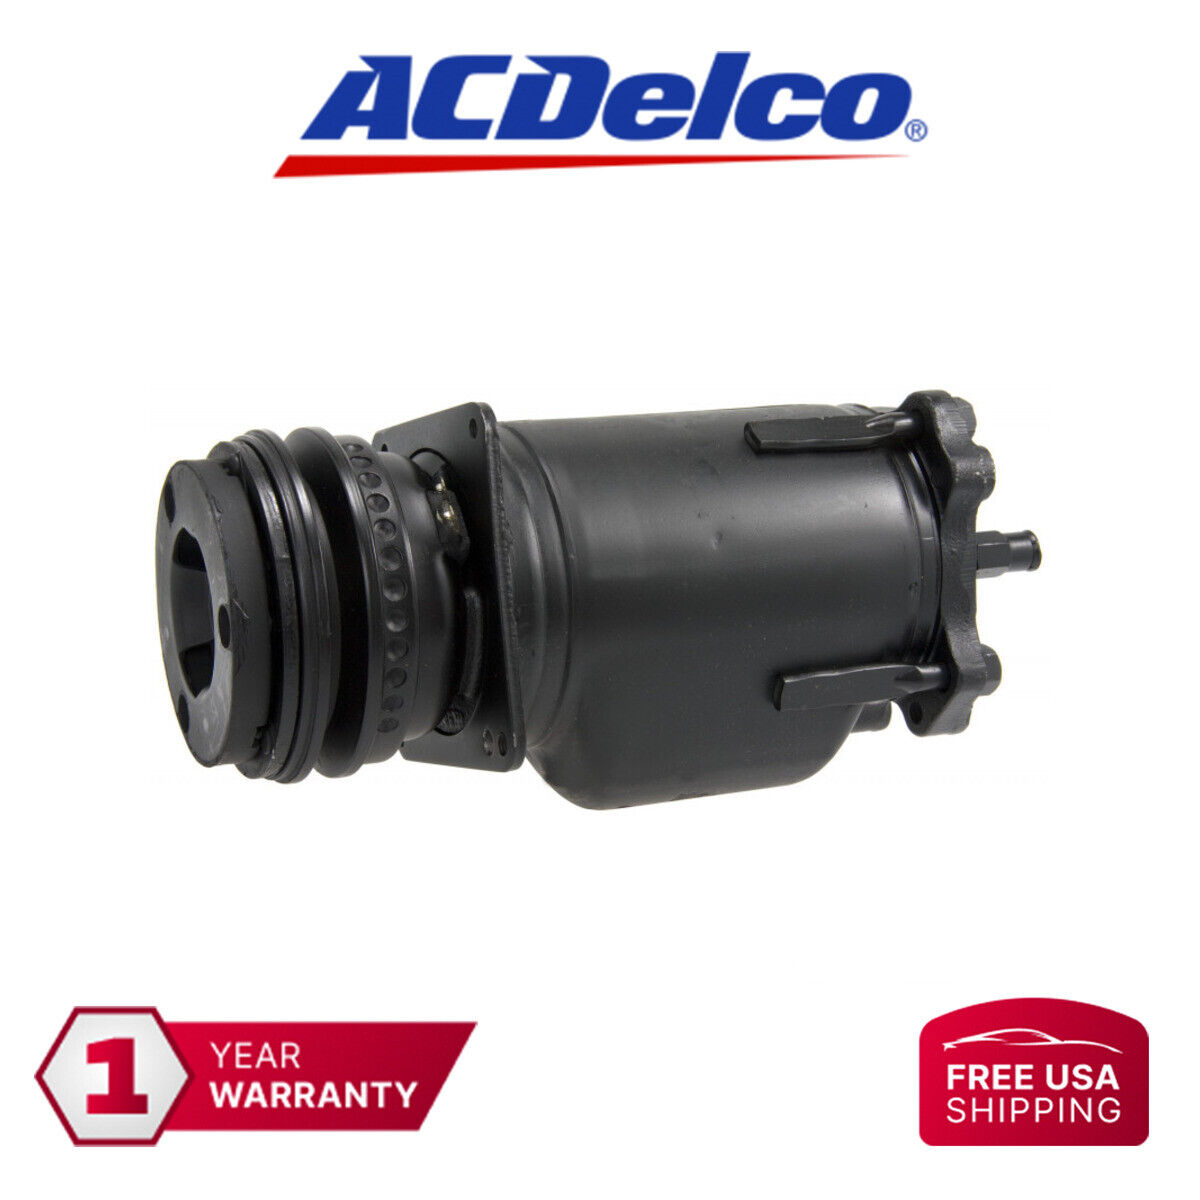 ACDelco A/C Compressor 15-20515